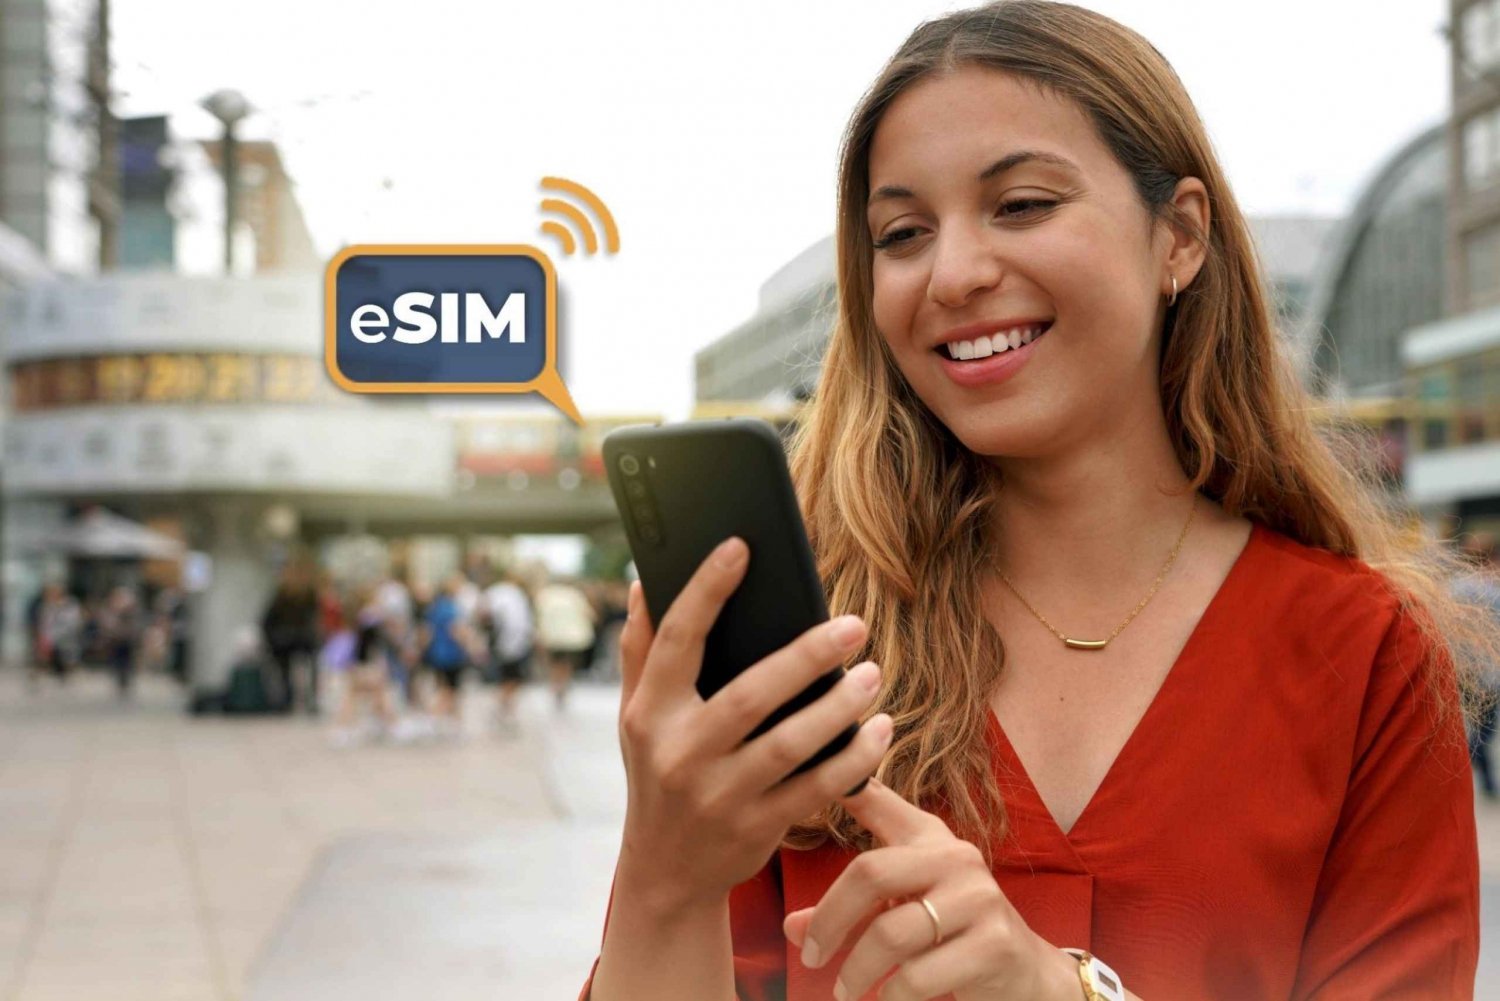 Munich&Germany: Unlimited EU Internet with eSIM Mobile Data